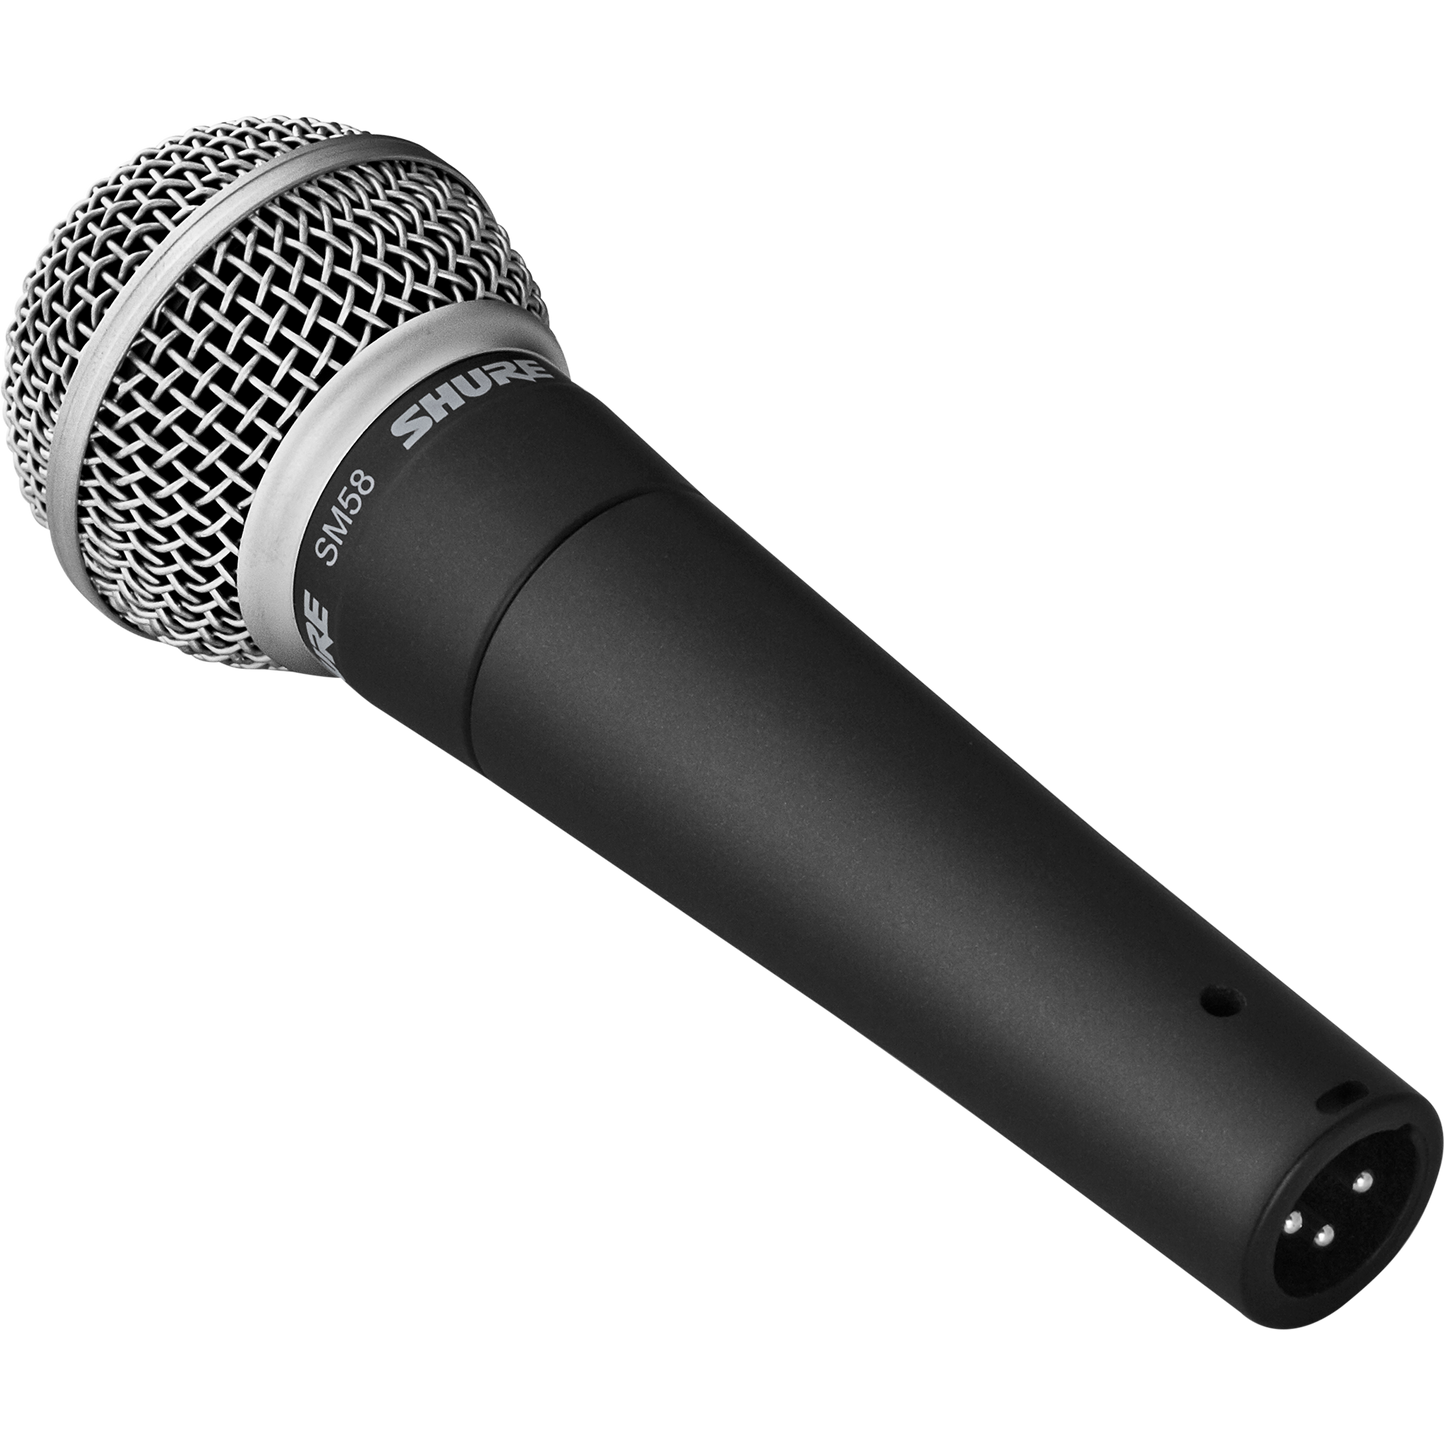 Shure SM58 Handheld Microphone